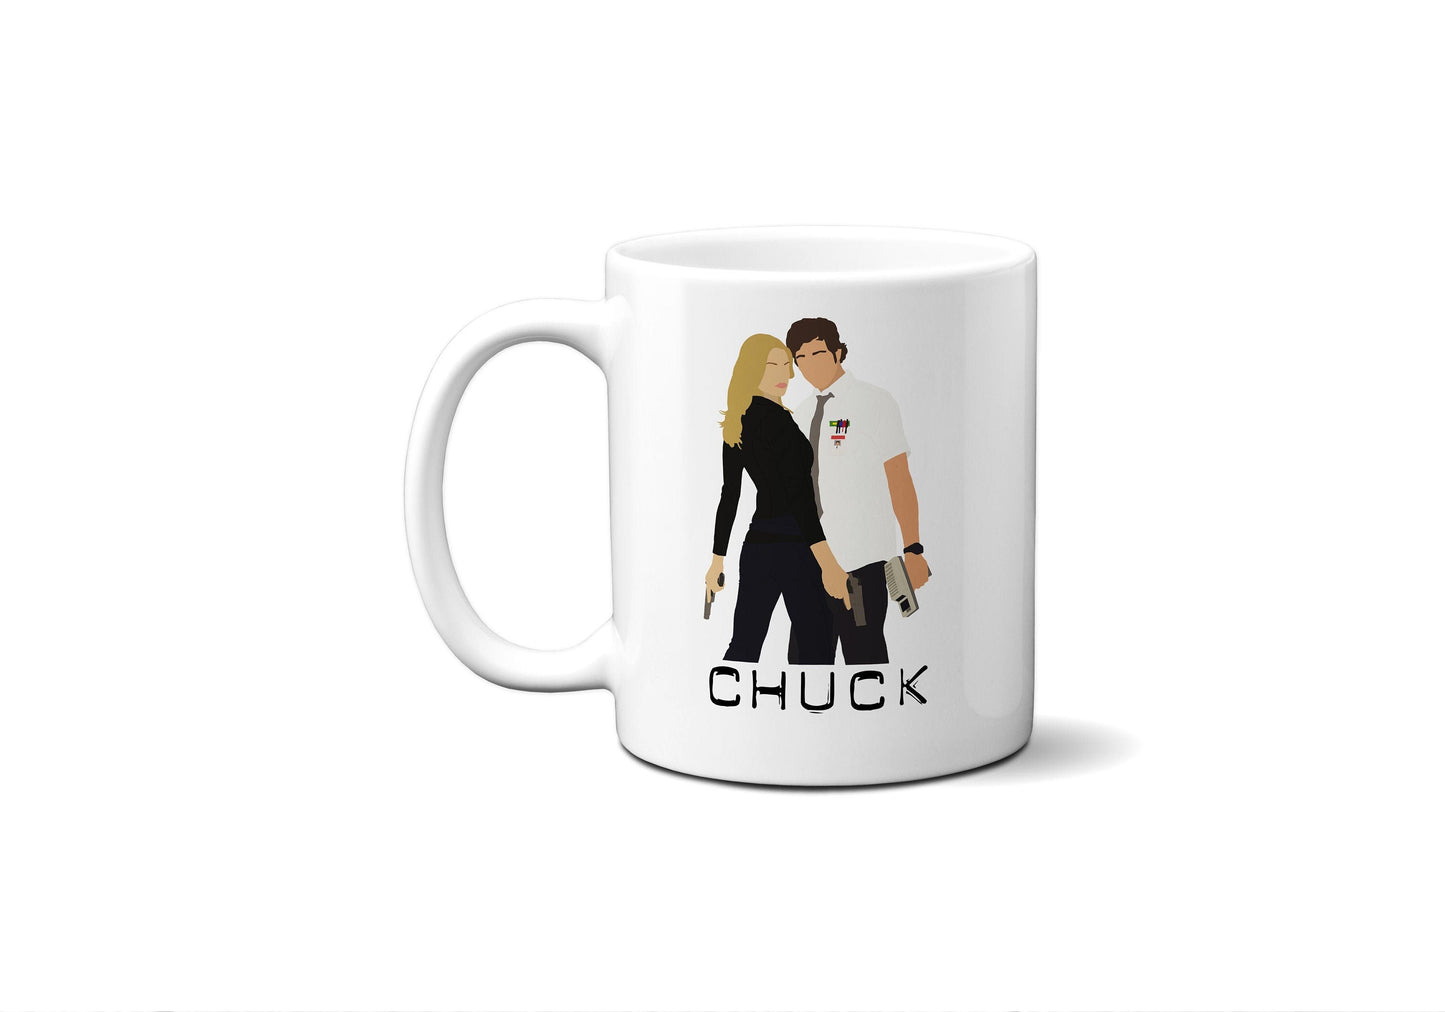 Chuck Bartowski Mug | Buy More Chuck TV Show Mug